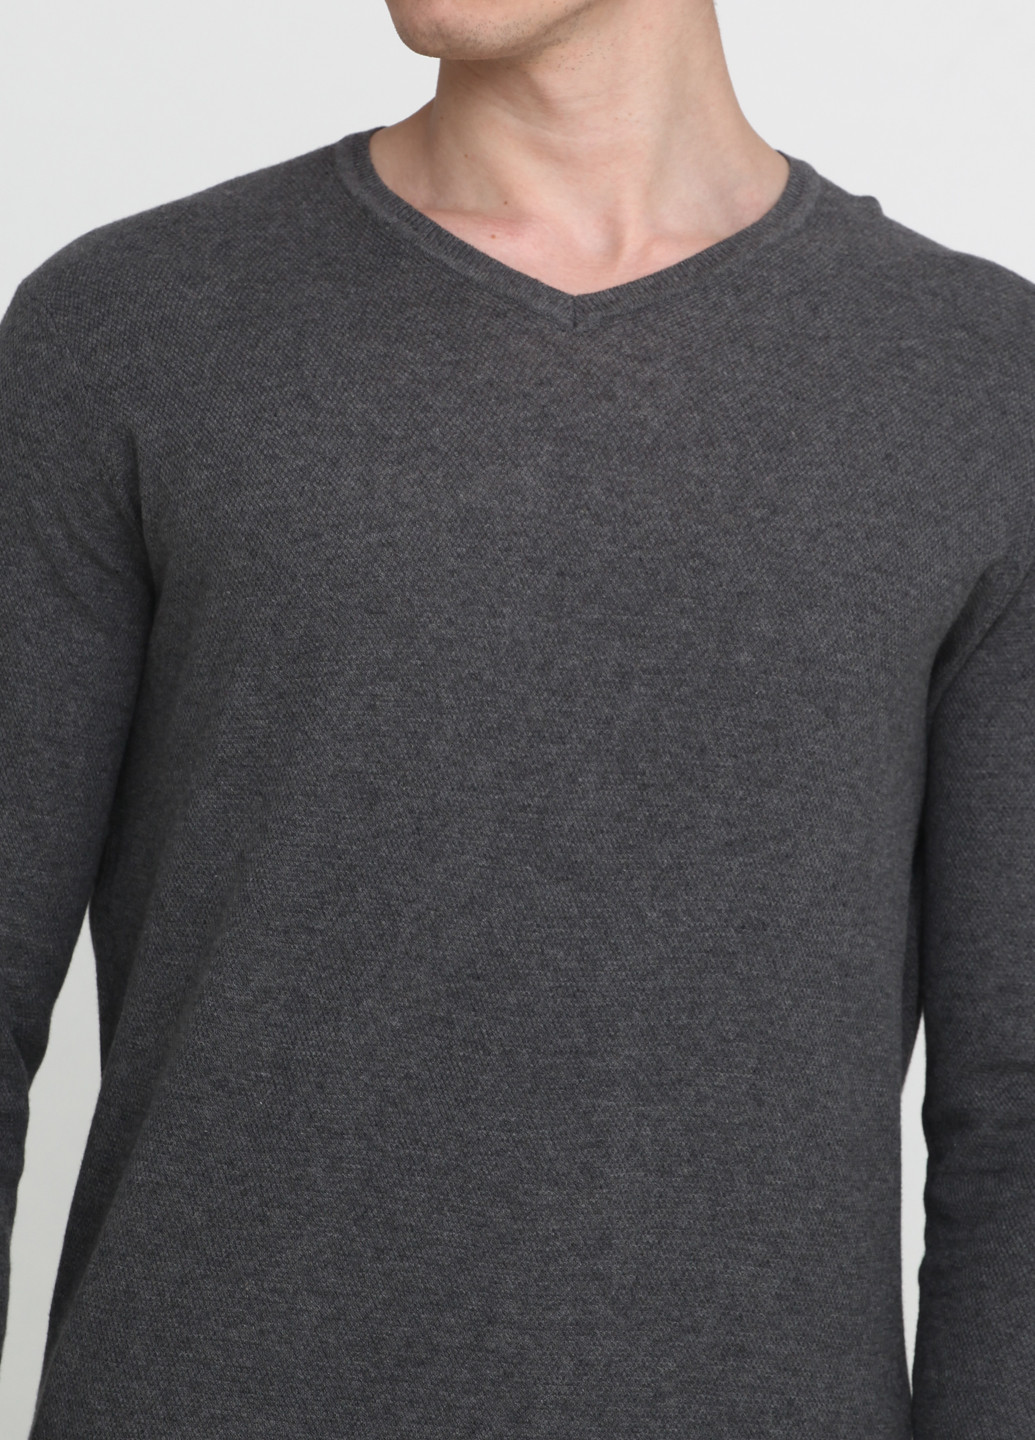 Грифельно-серый демисезонный пуловер пуловер Springfield